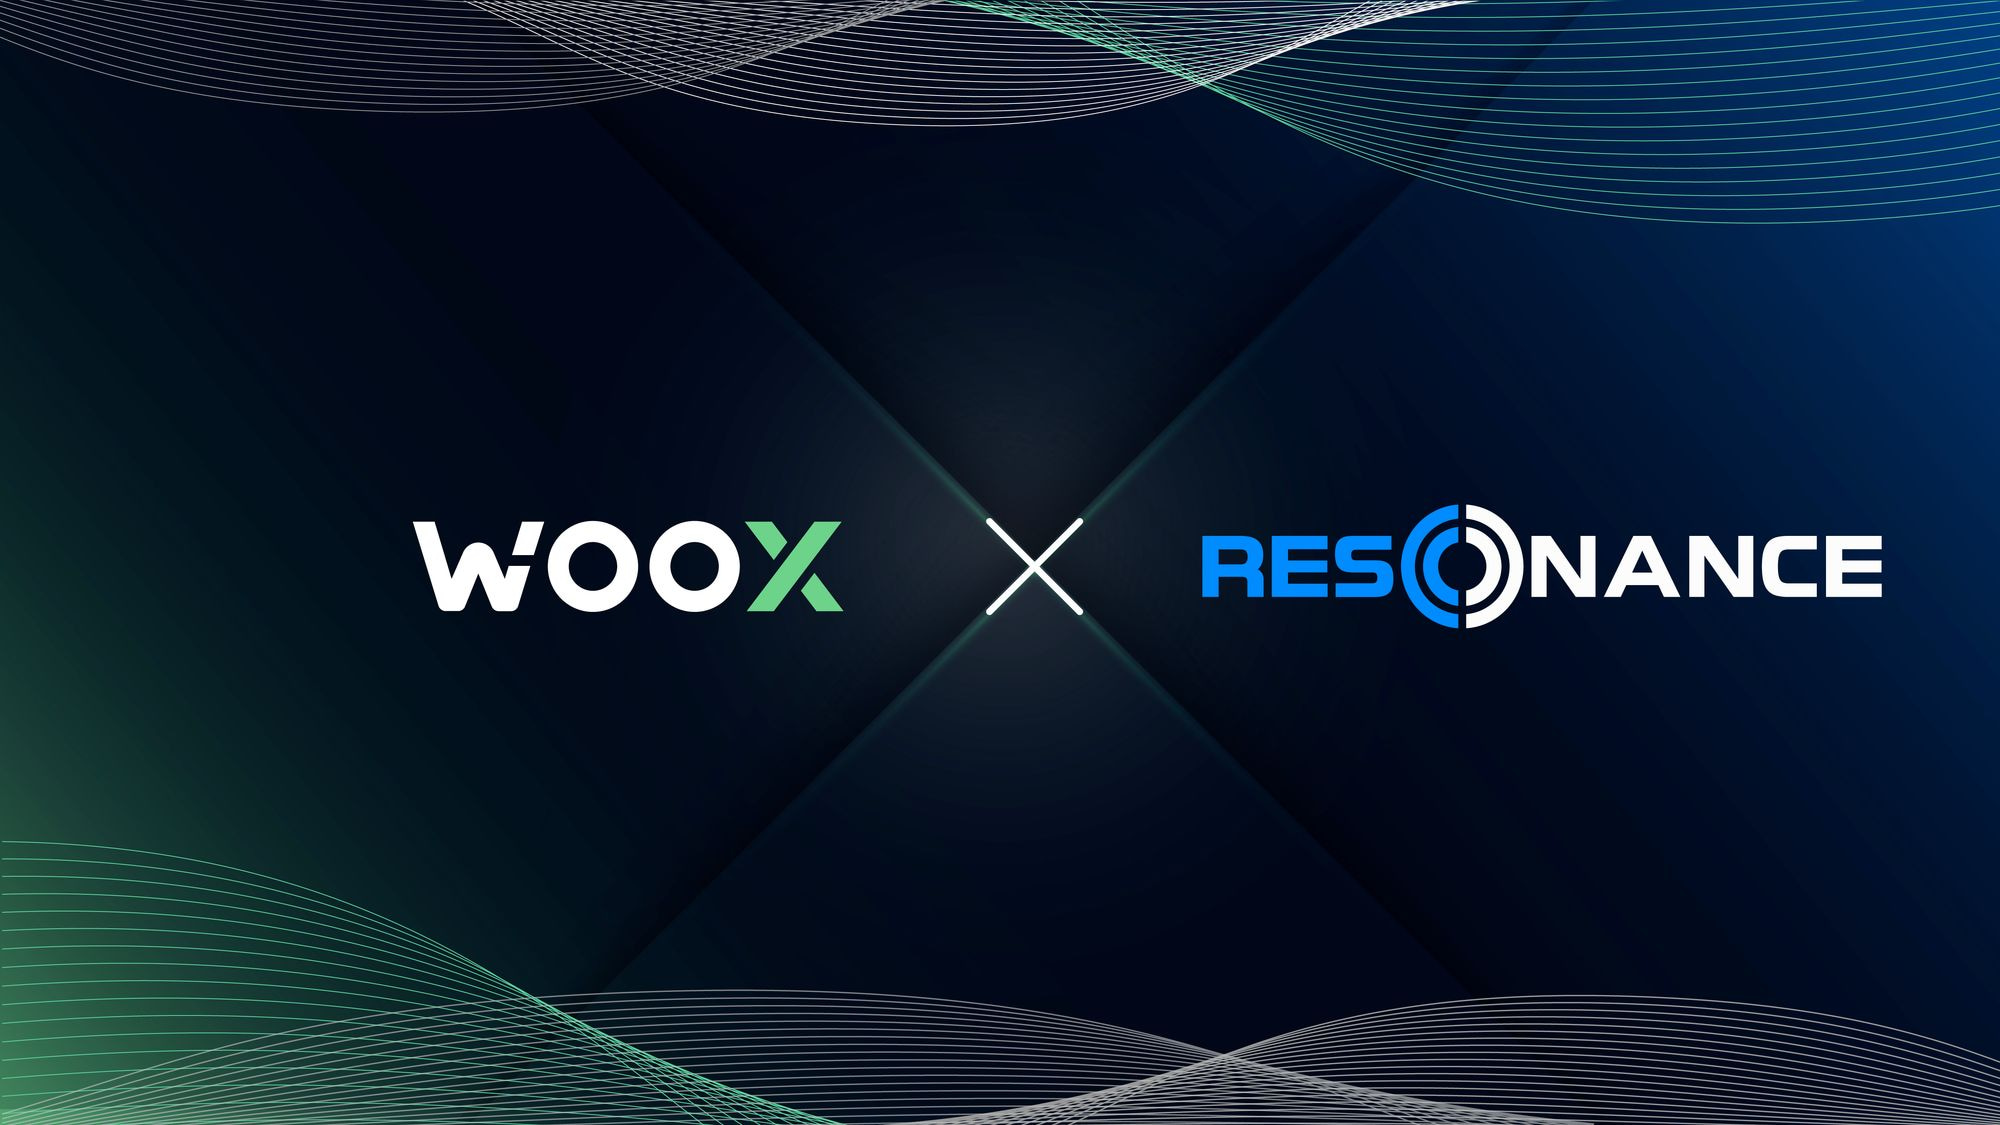 WOO X integrates with Resonance